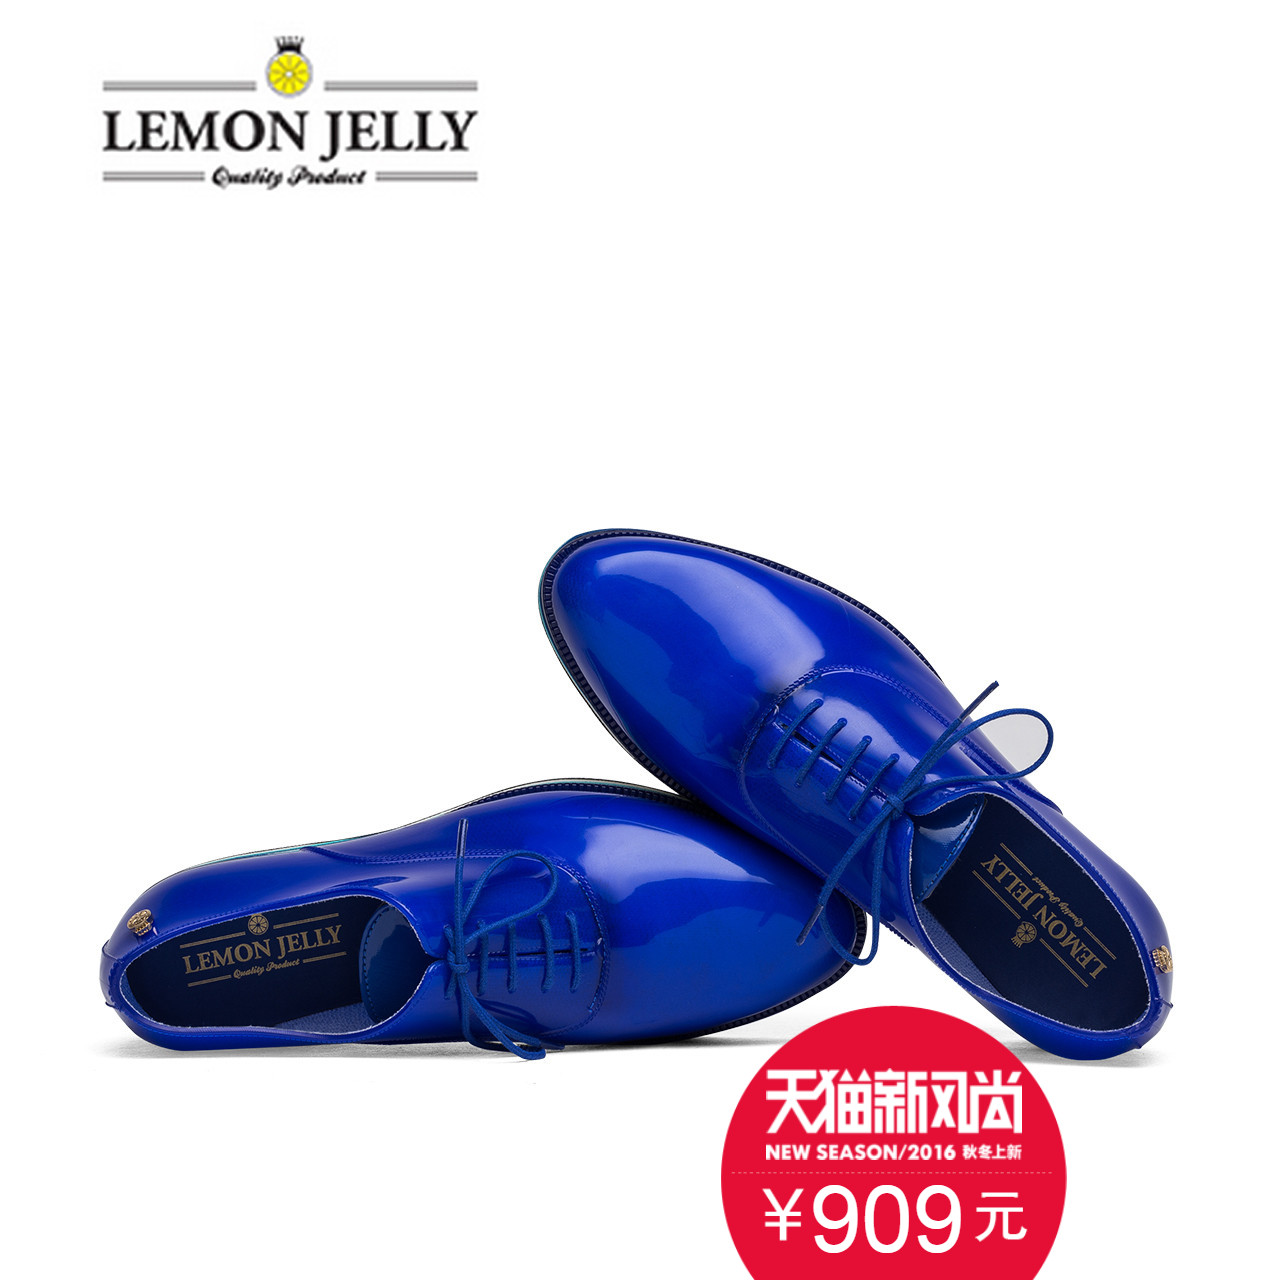 Buy Lemon jelly rubber jelly shoes 2016 